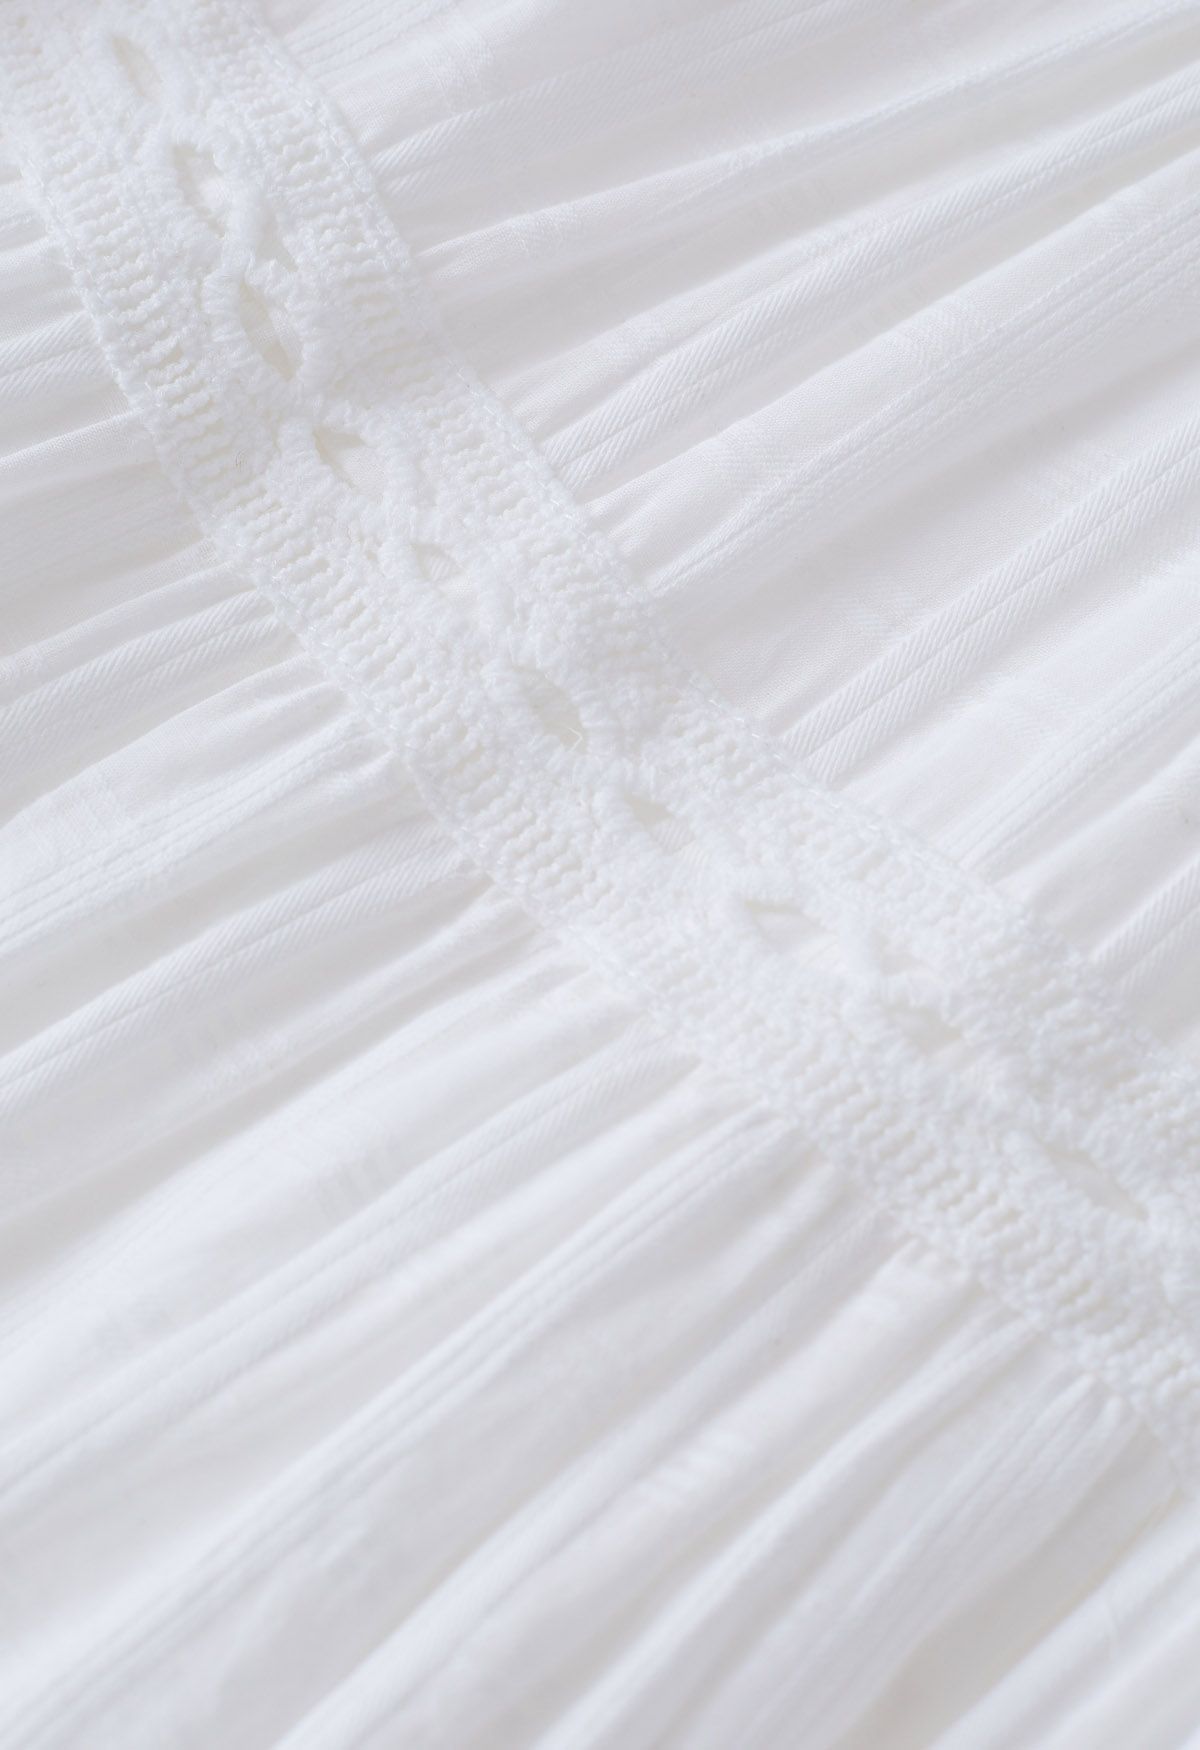 Scalloped V-Neck Checked Midi Dress in White